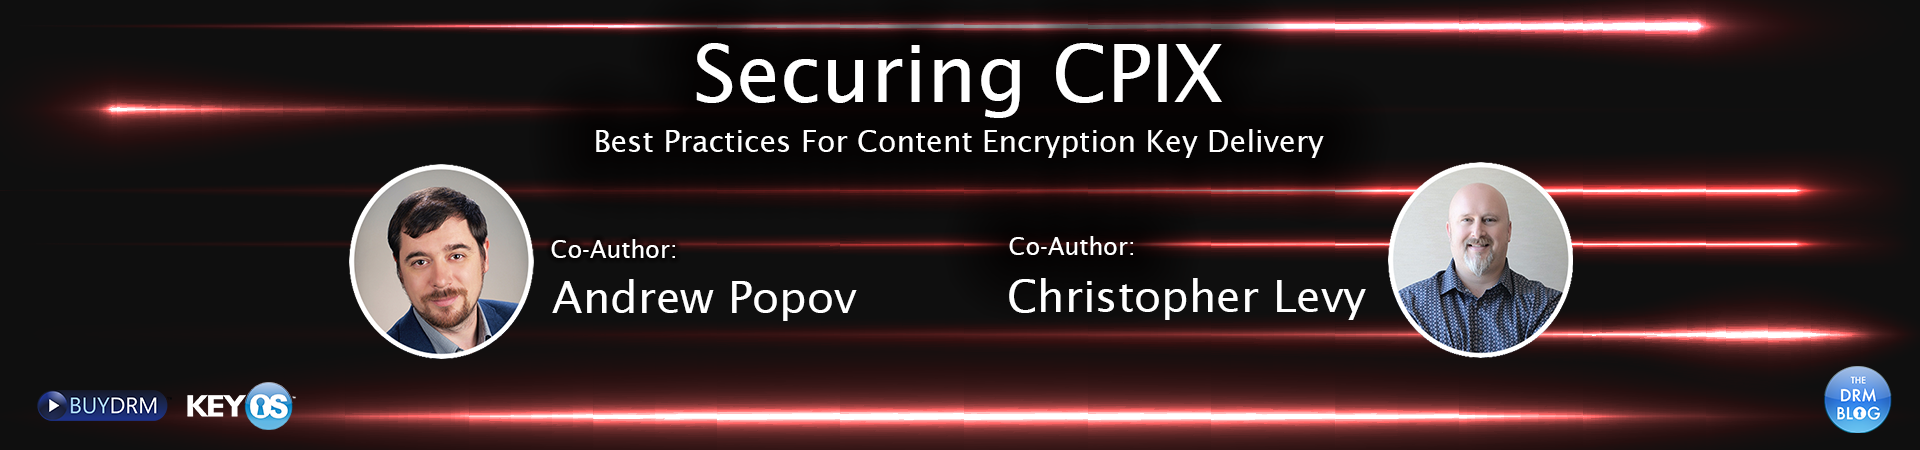 Securing CPIX - A Best Practices Approach to Encryption Key Delivery_V2_DesktopSlider_1920x450-1